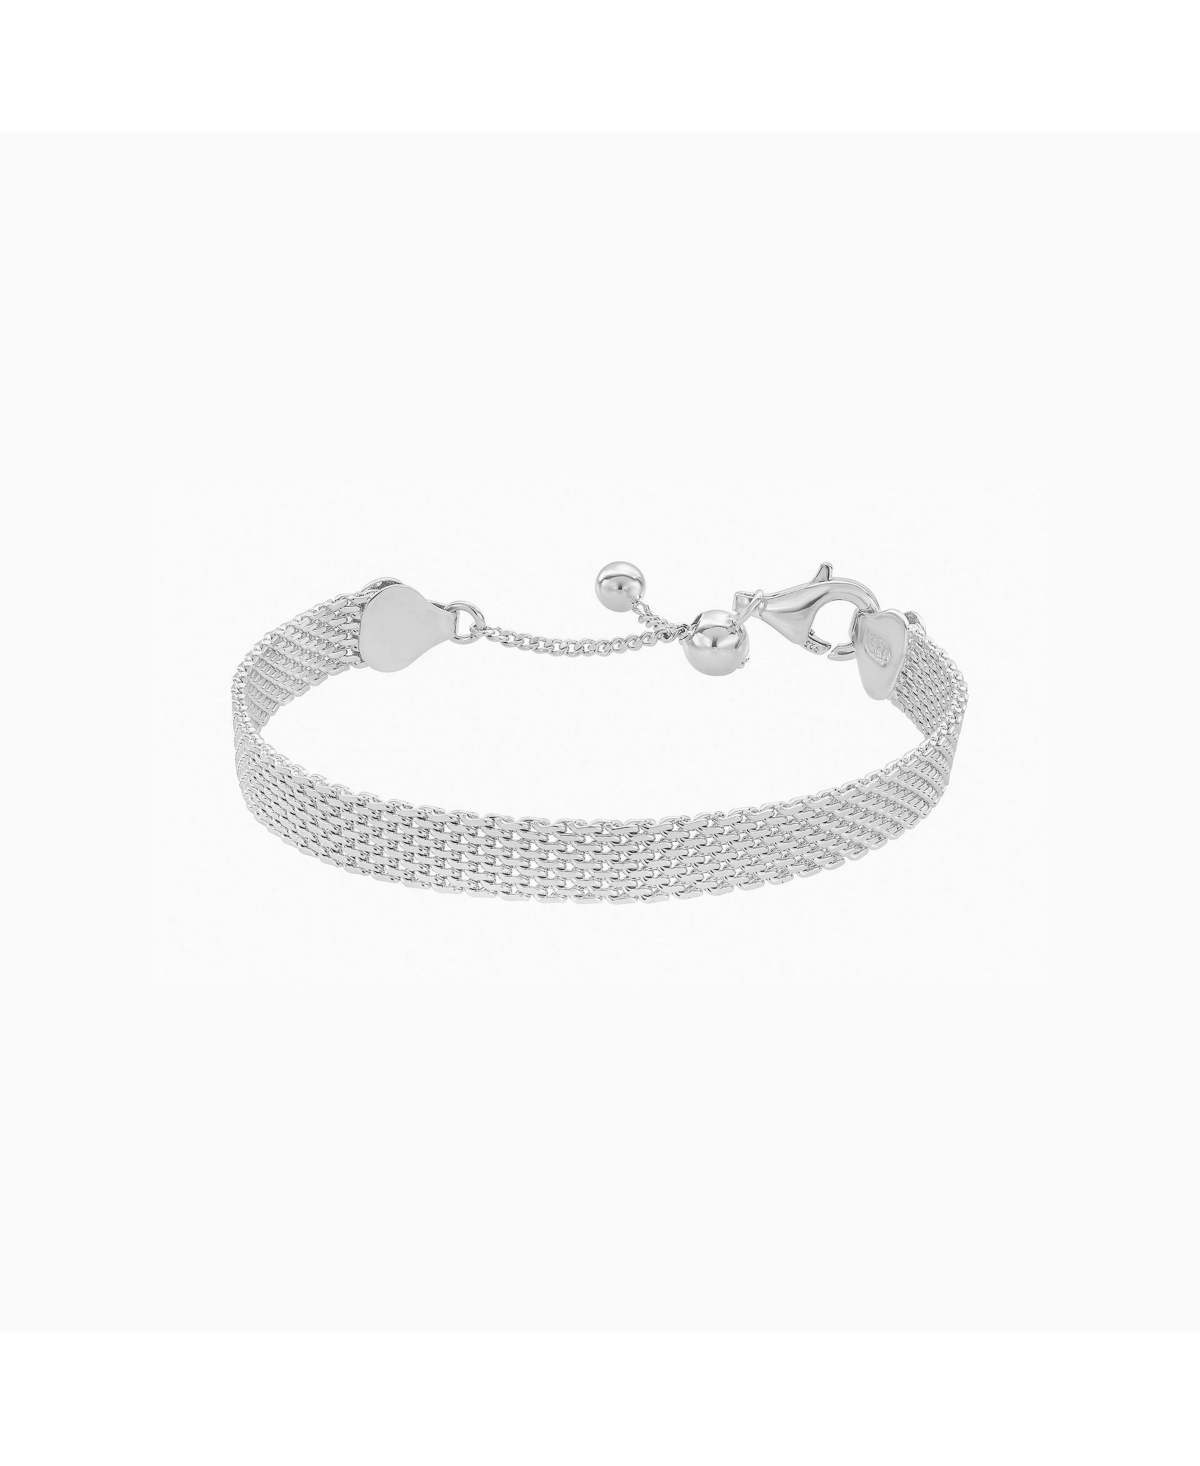 Mash Chain Bracelet - Silver